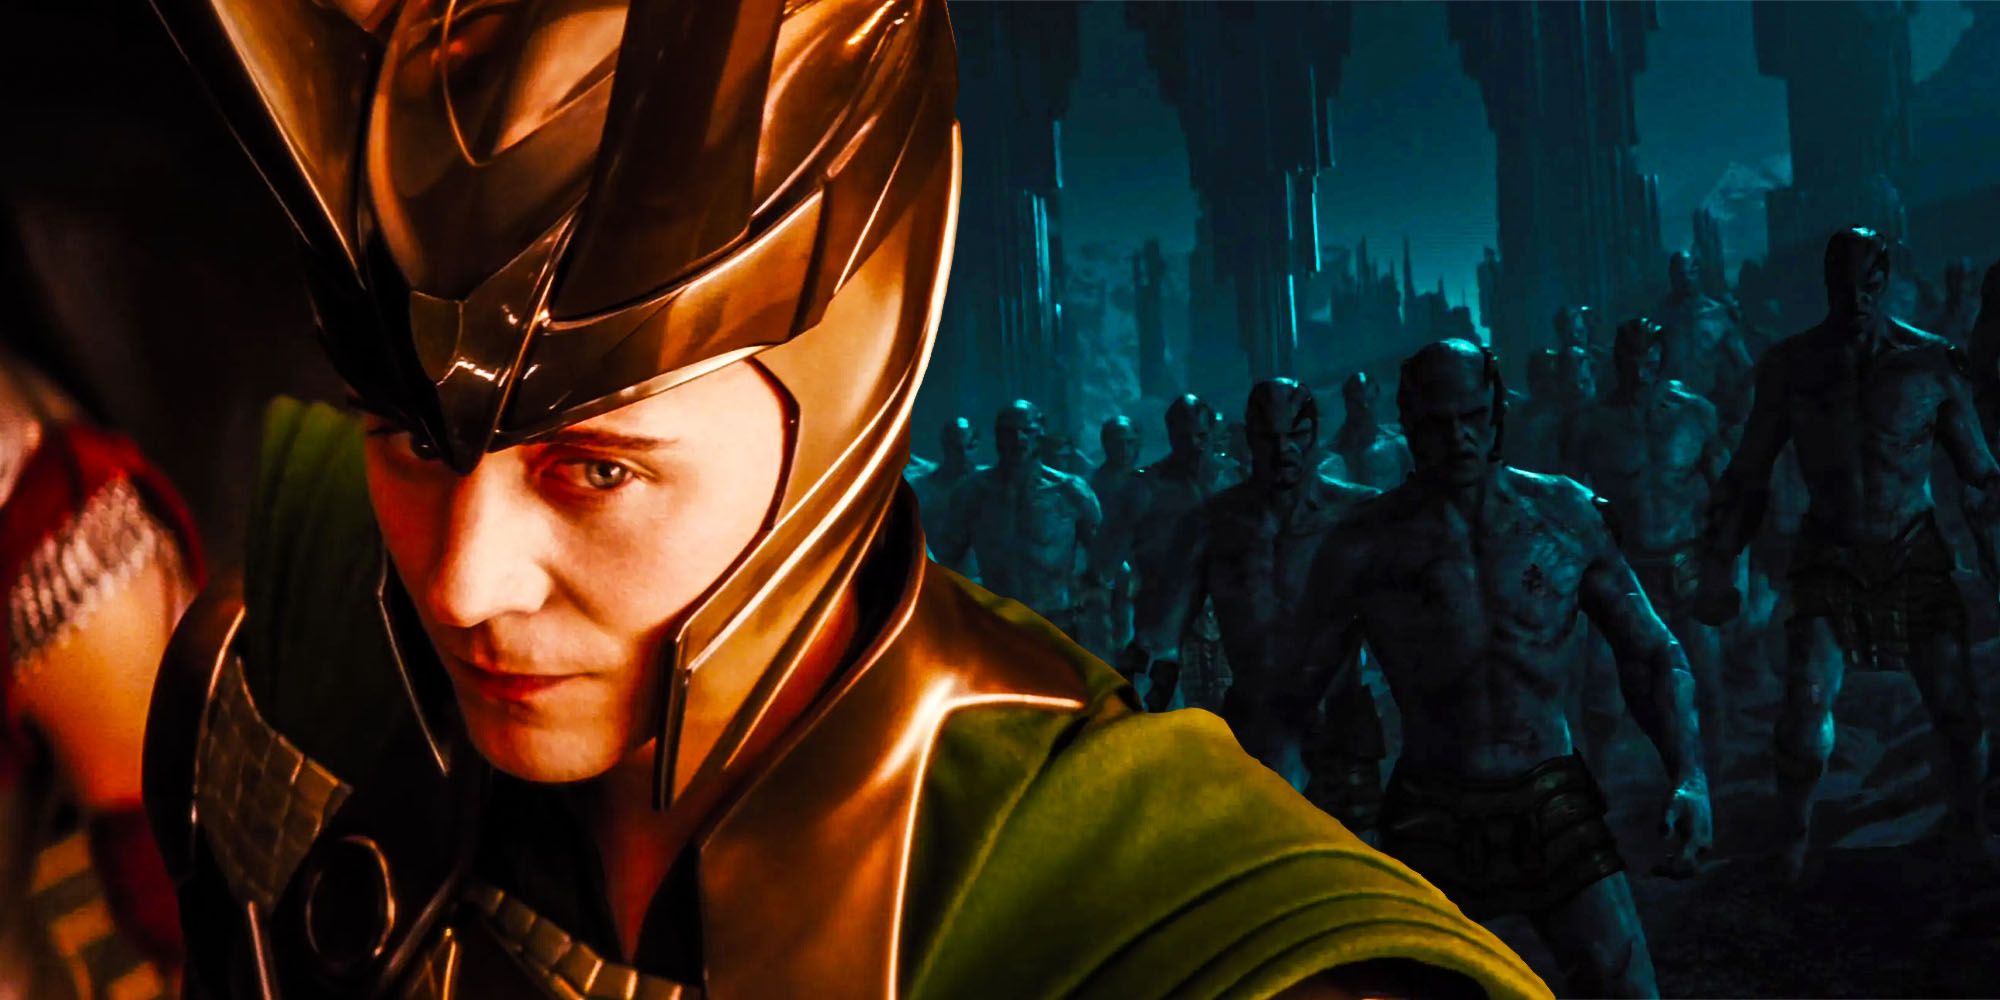 Loki As Ice Giant Wallpapers